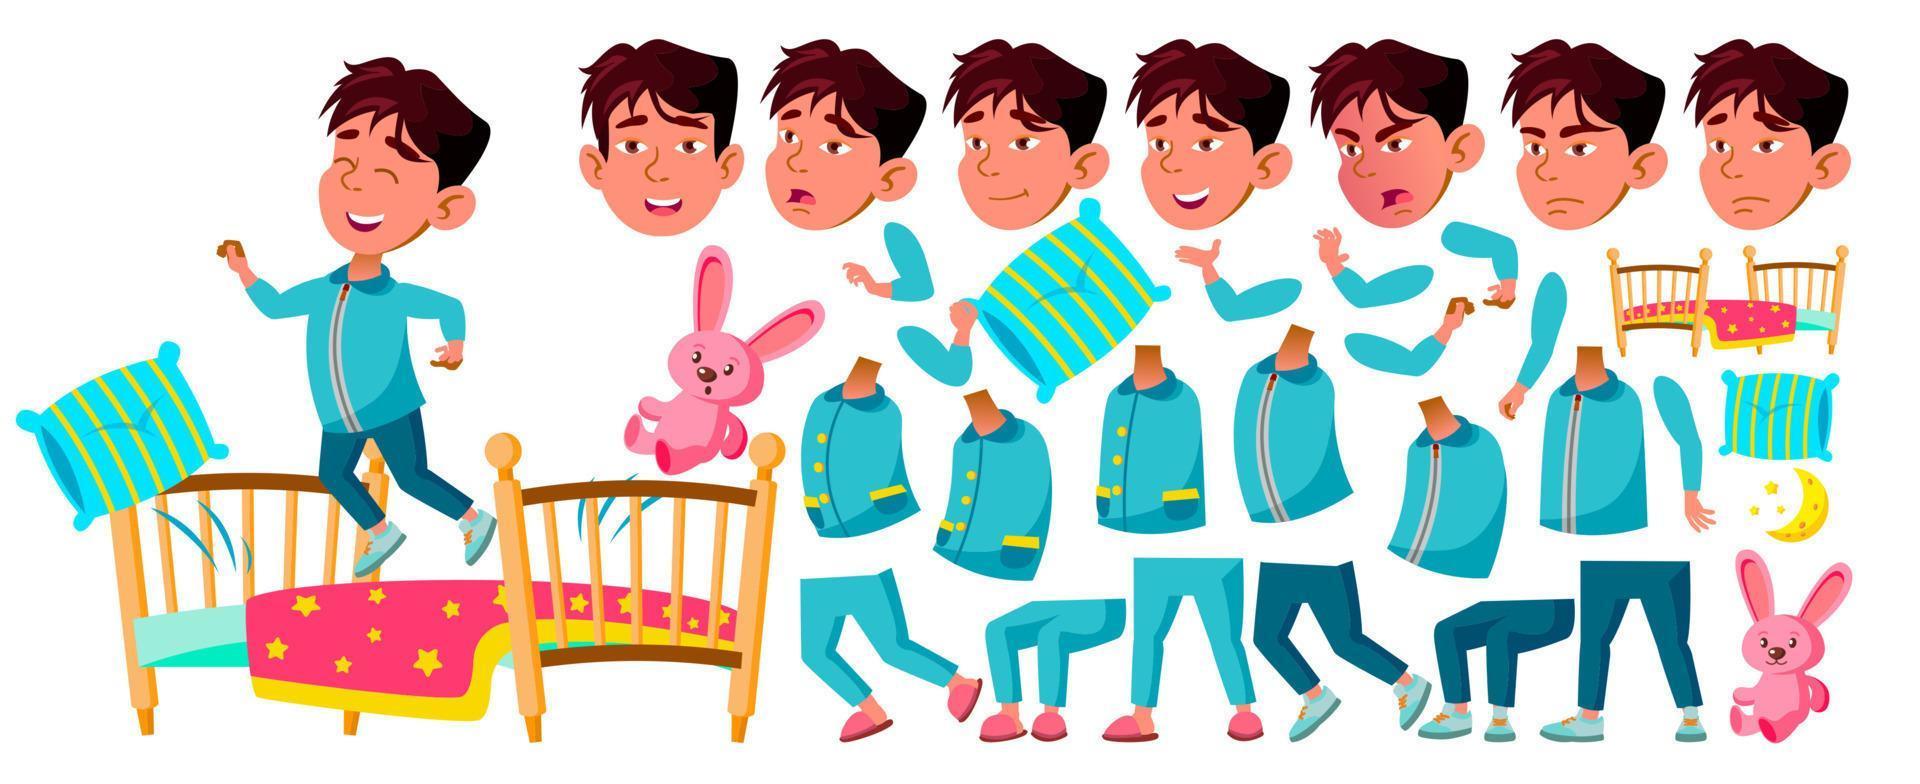 Asian Boy Kindergarten Kid Vector. Animation Creation Set. Sleep, Bedroom. Pillow,Toy. Face Emotions, Gestures. Preschooler Playing. Friendship. For Advertising, Placard Design. Animated. Illustration vector